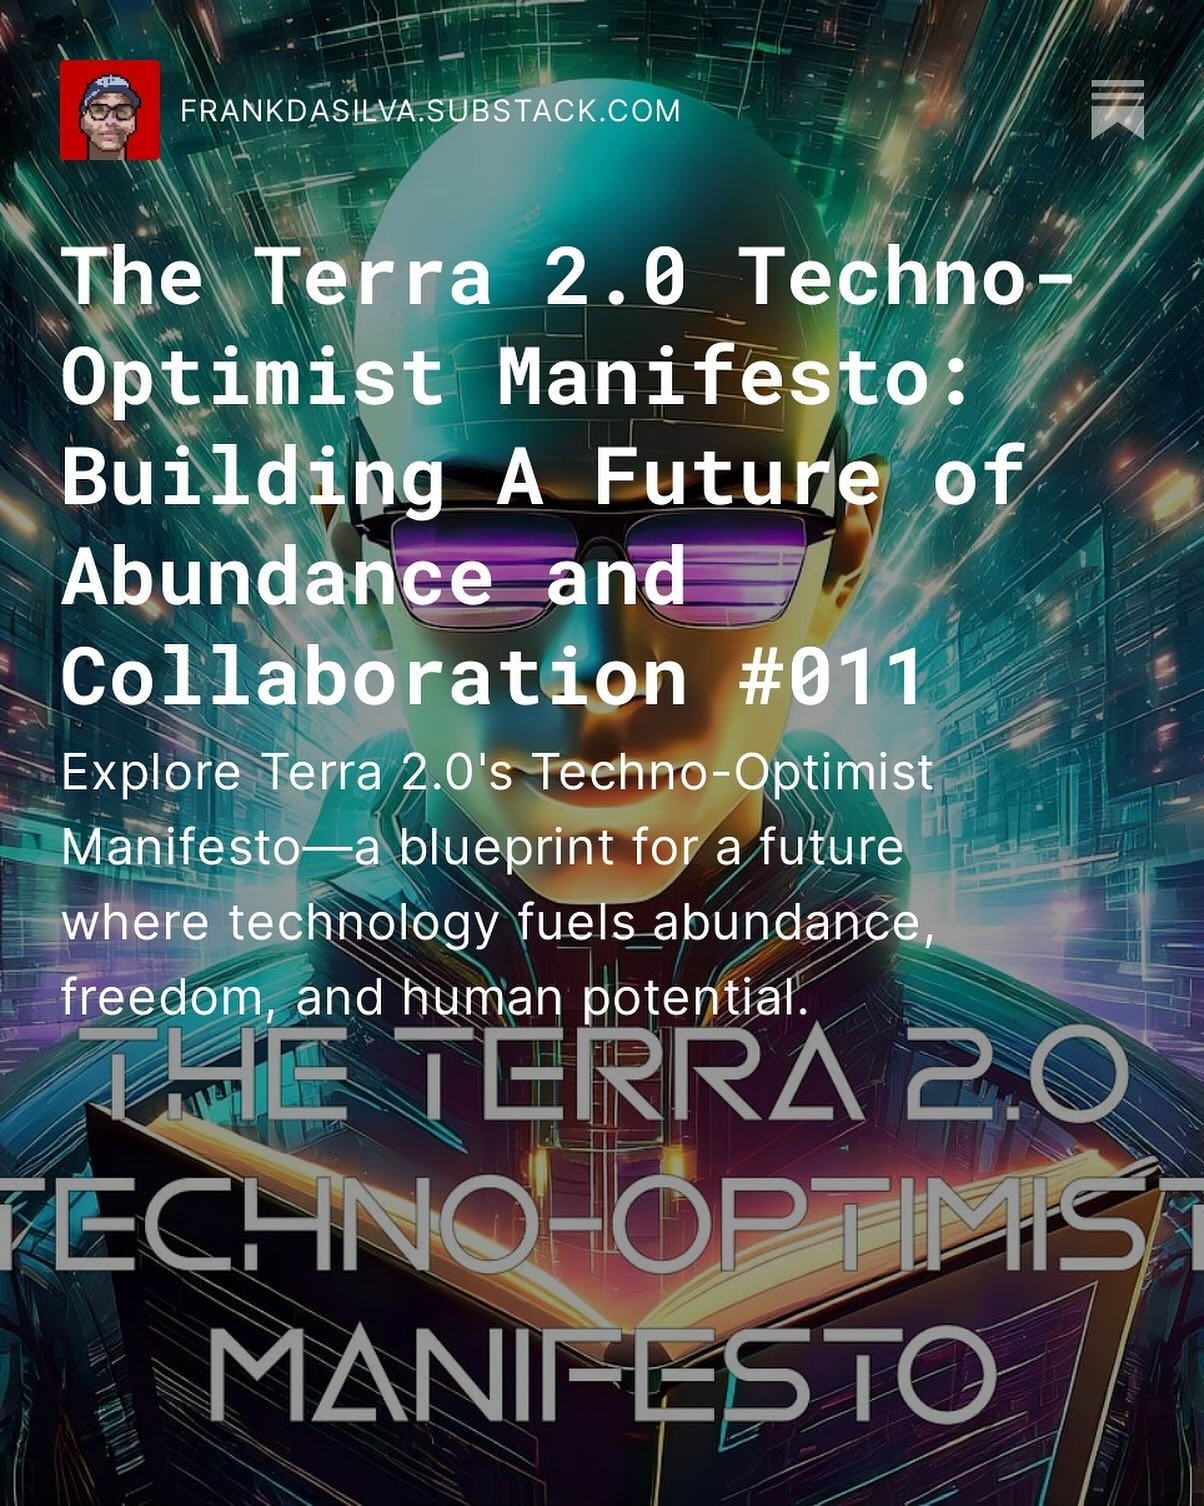 The Terra 2.0 Techno-Optimist Manifesto: Building A Future of Abundance and Collaboration. 
Explore Terra 2.0's Techno-Optimist Manifesto&mdash;a blueprint for a future where technology fuels abundance, freedom, and human potential.

https://frankdas